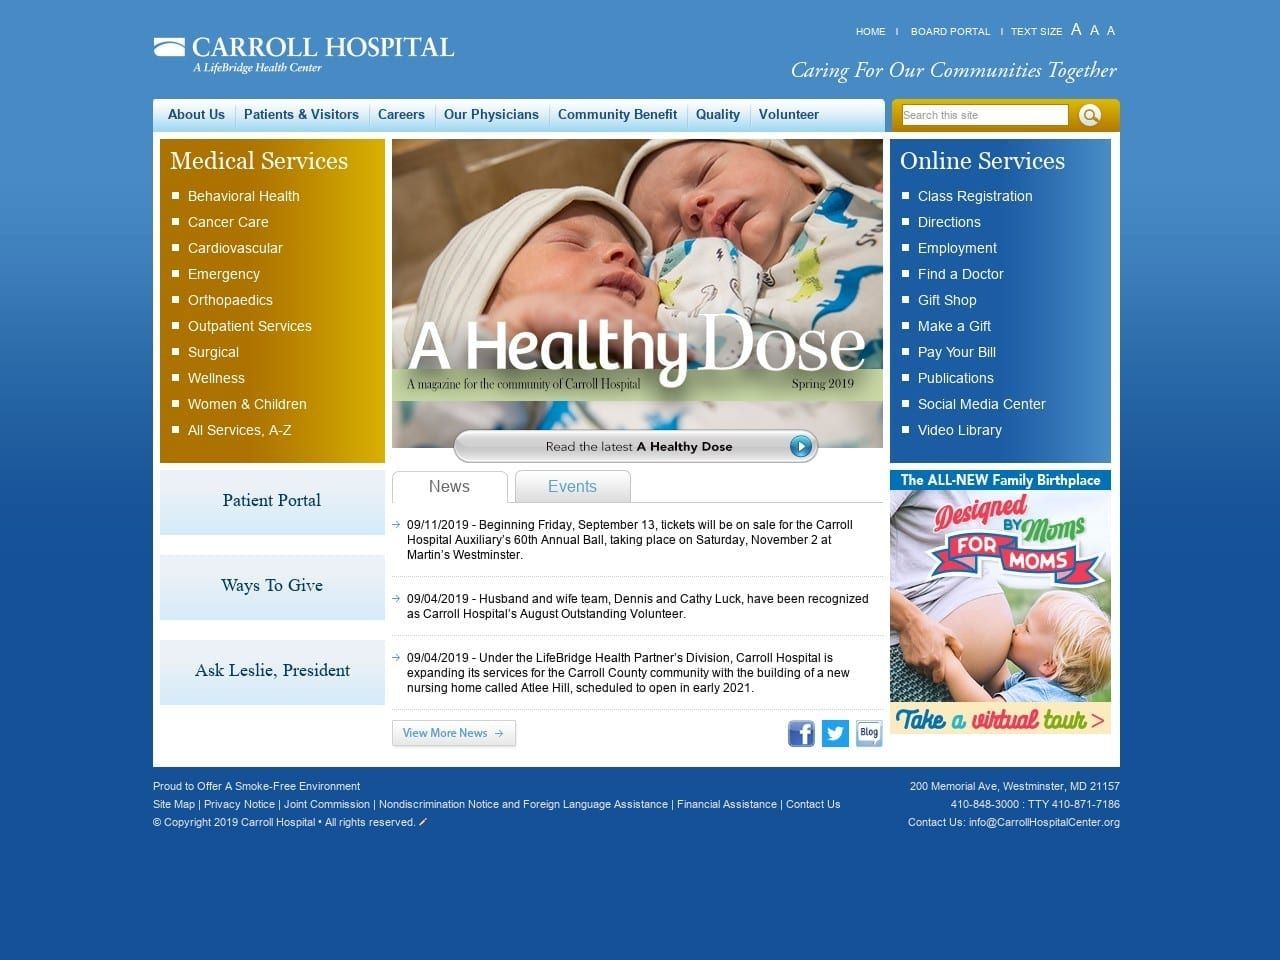 Carroll Hospital Center Website Screenshot from carrollhospitalcenter.org